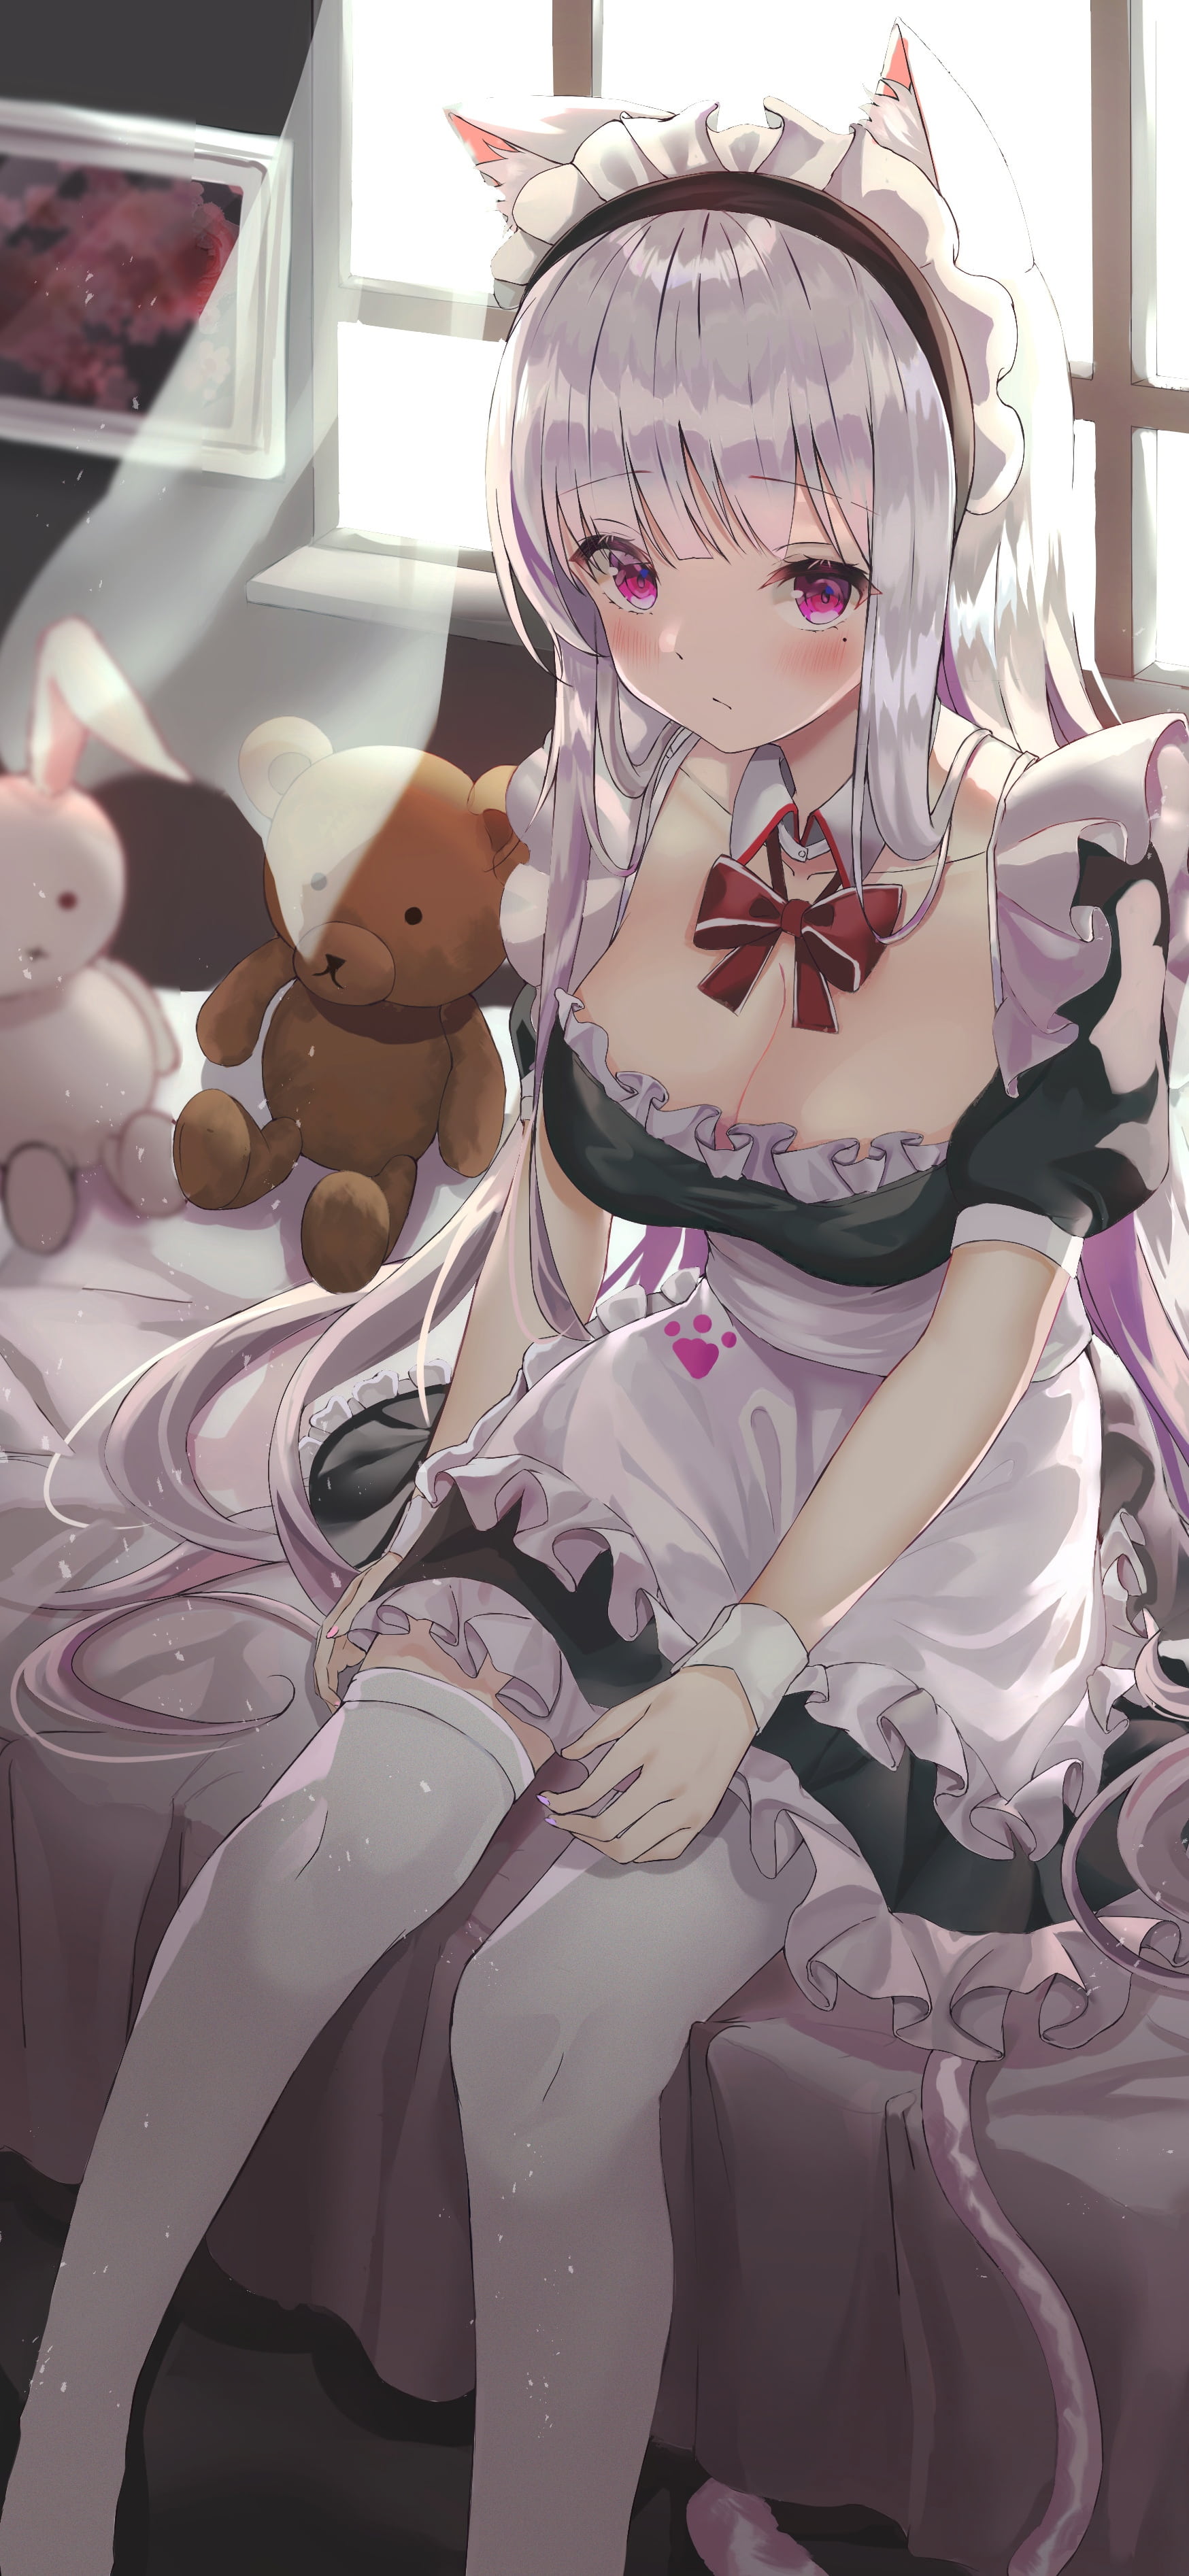 Anime 1748x3788 anime anime girls original characters artwork Lotpi cat girl maid outfit